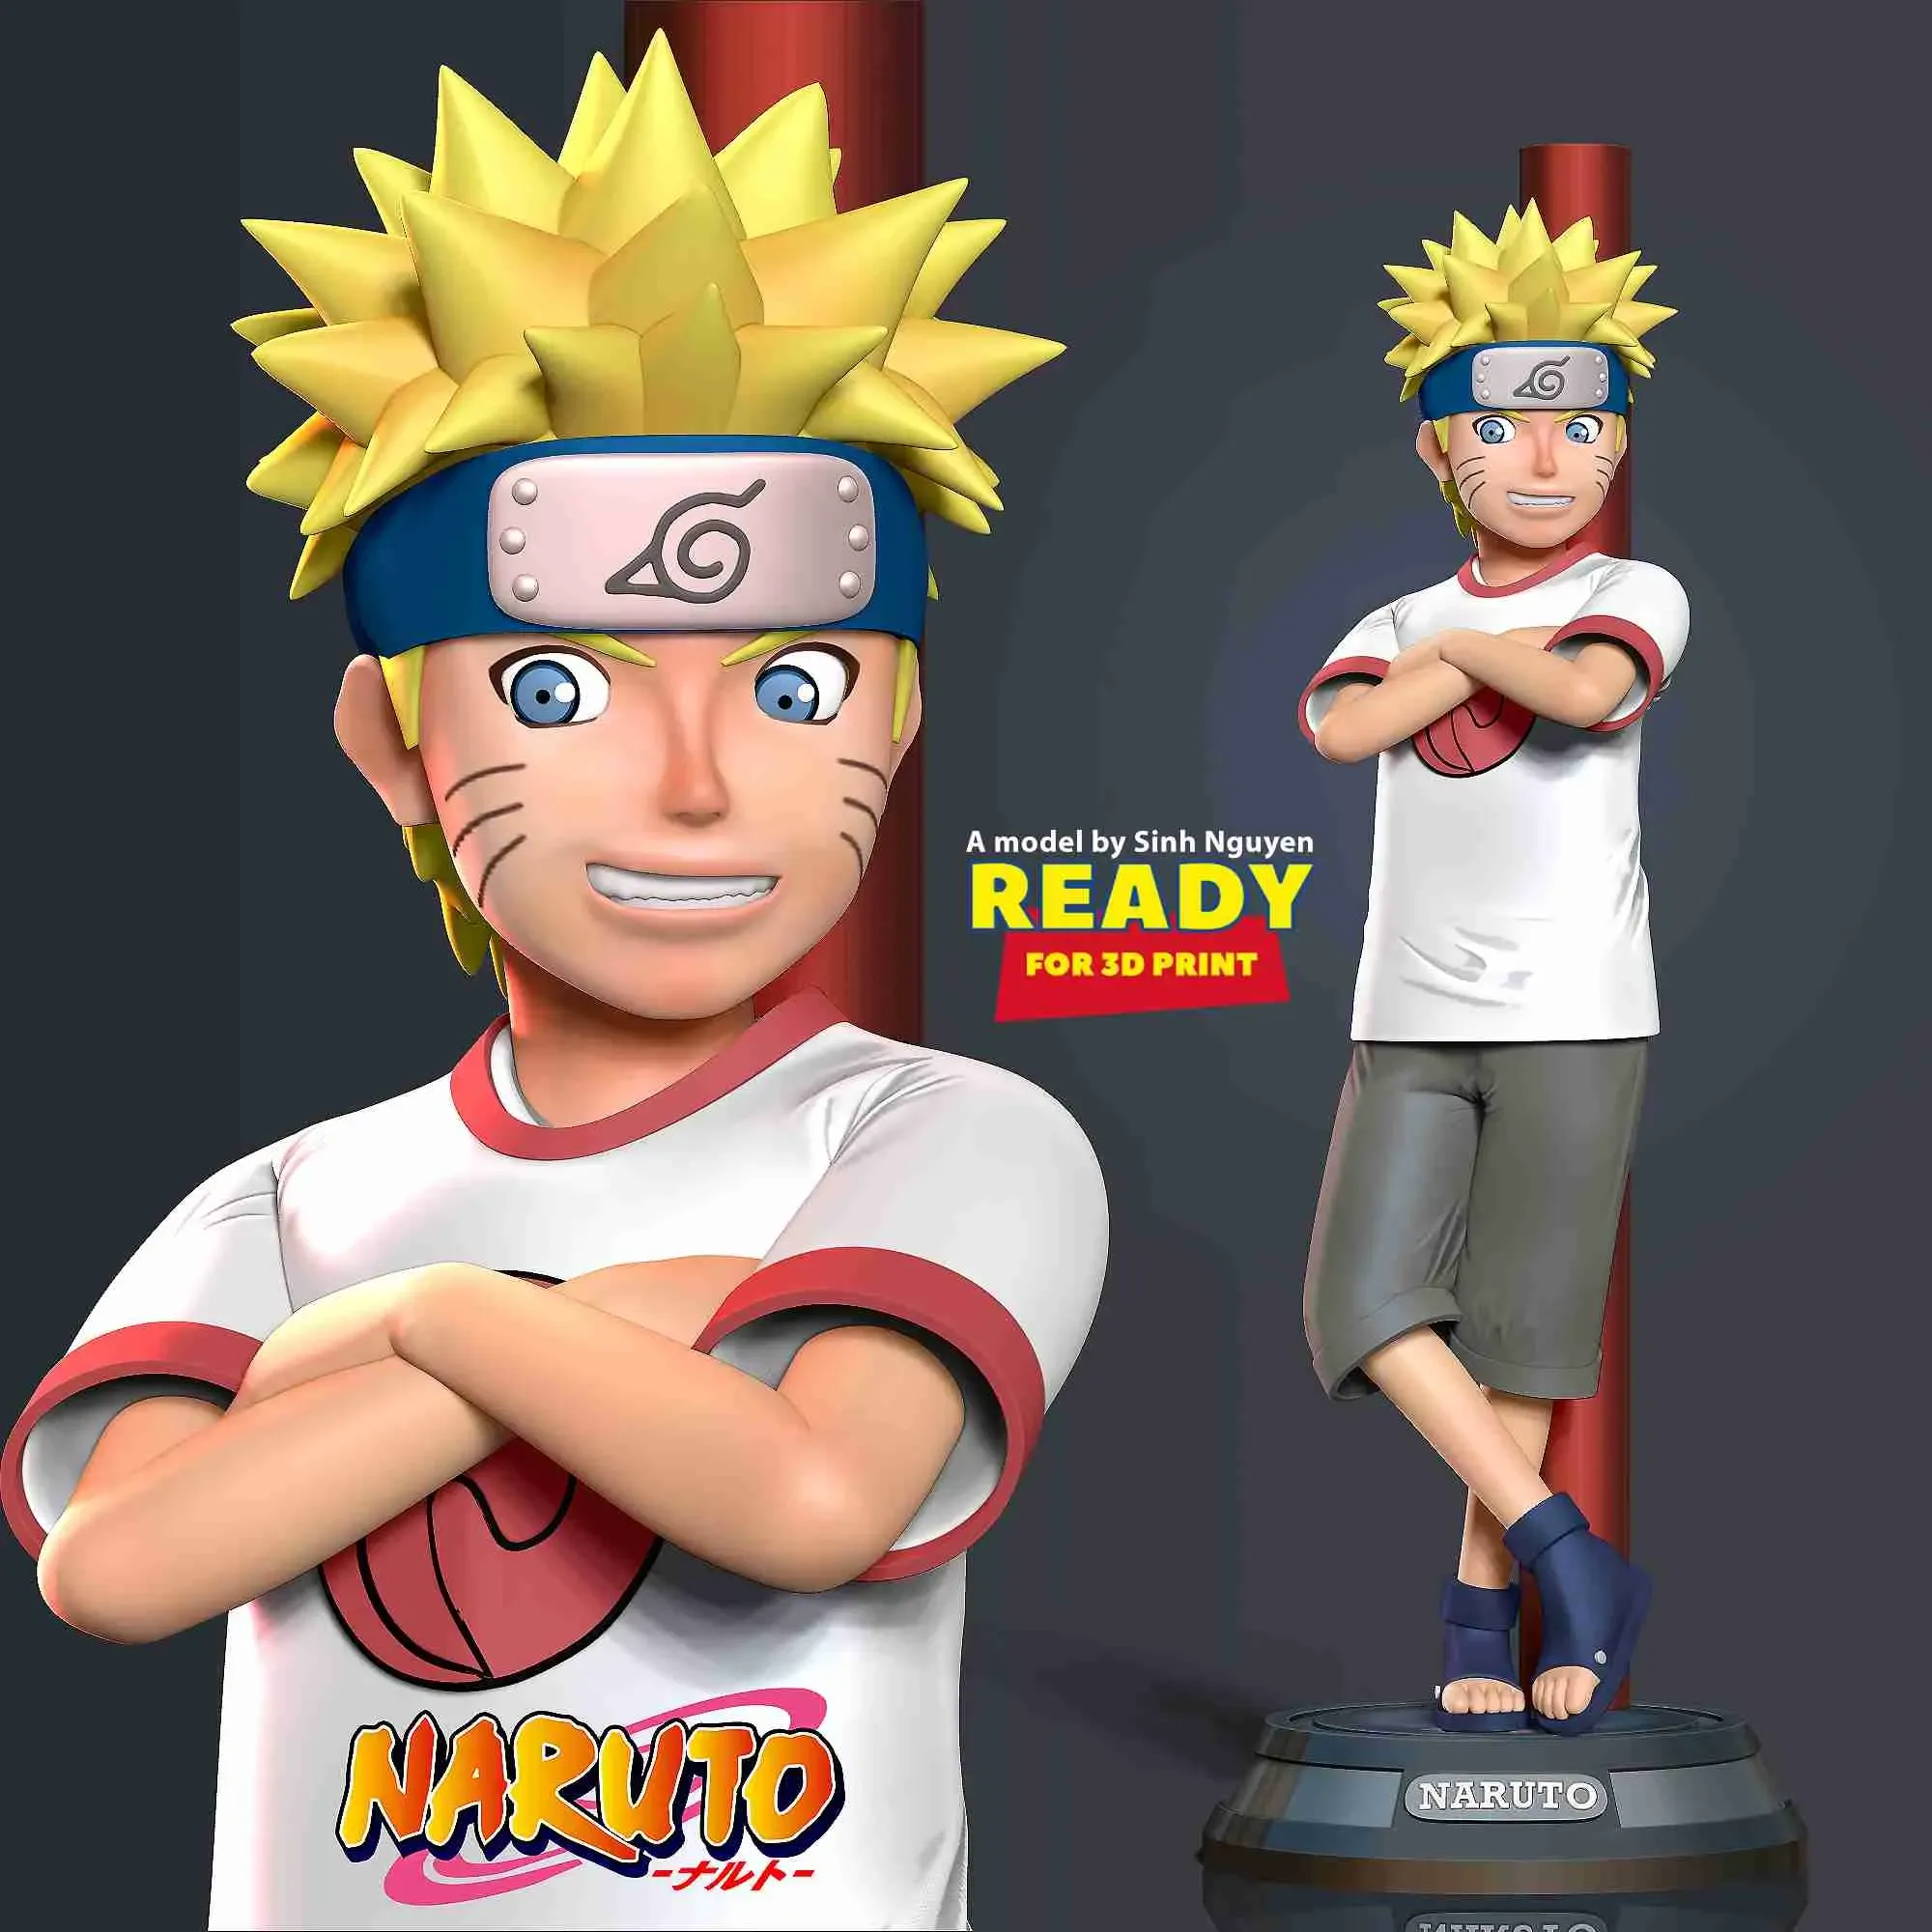 Naruto - Child suit